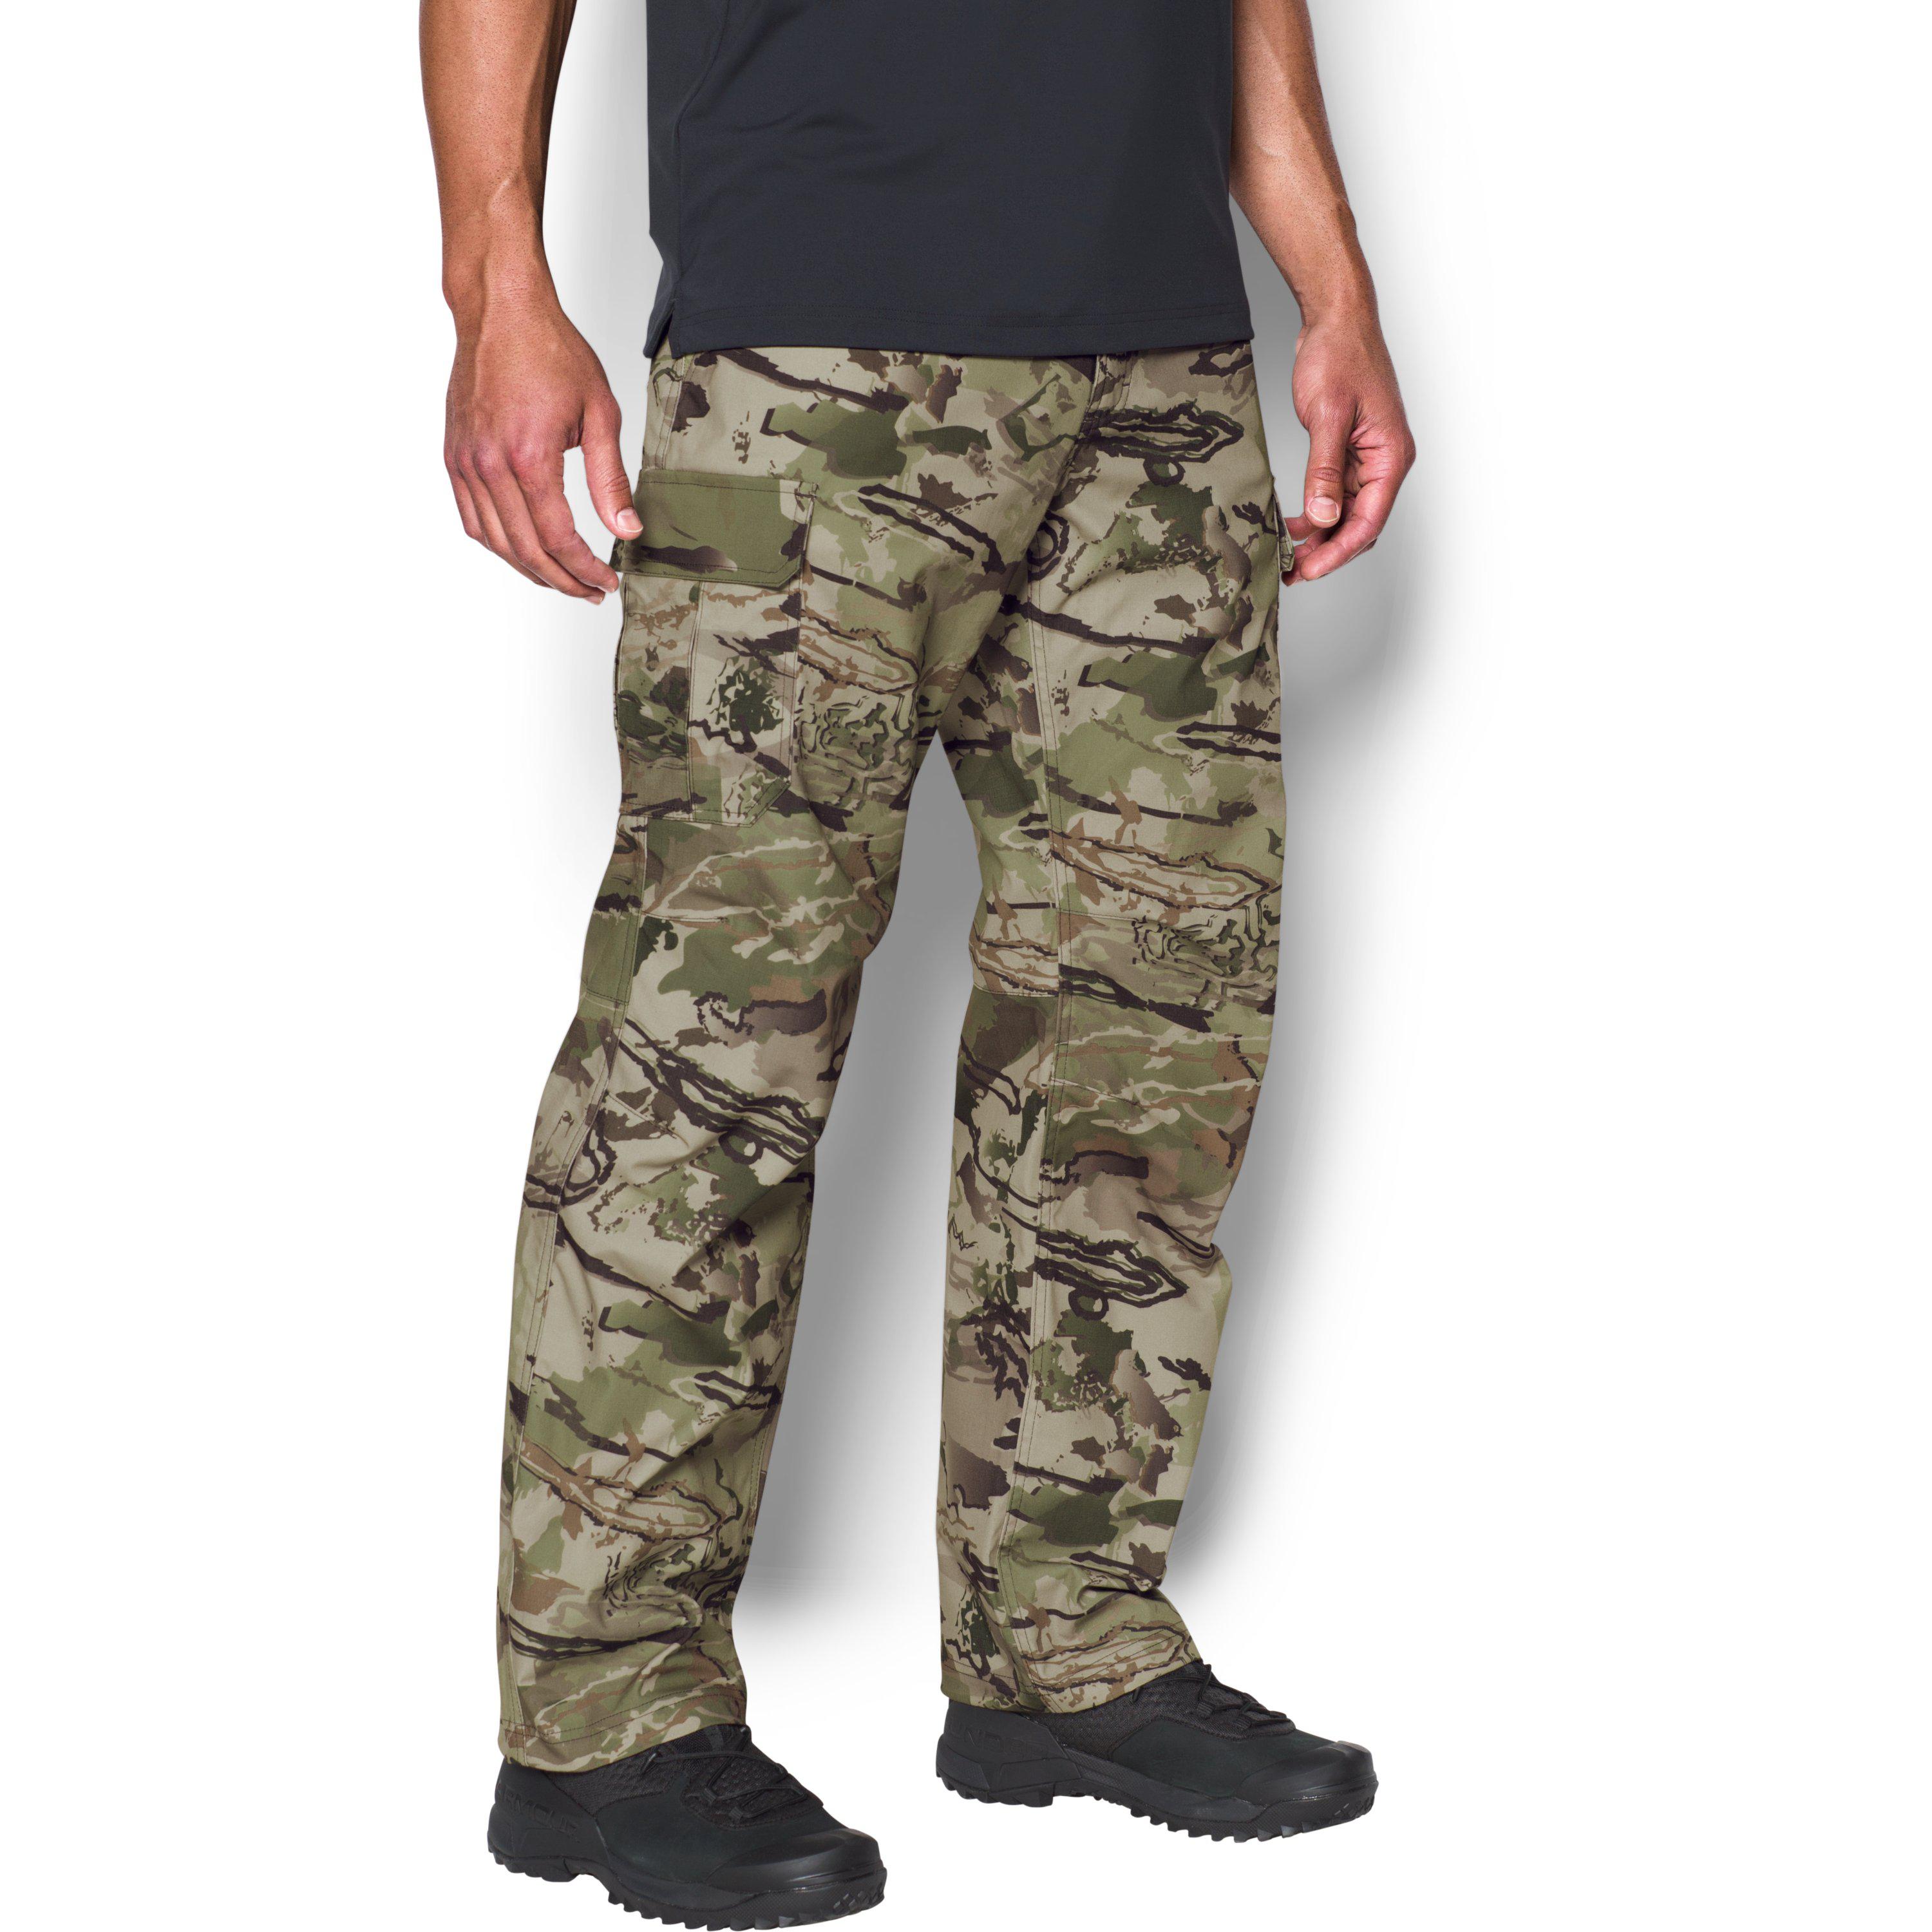 Under Armour Men's Ua Storm Tactical Camo Patrol Pants for Men